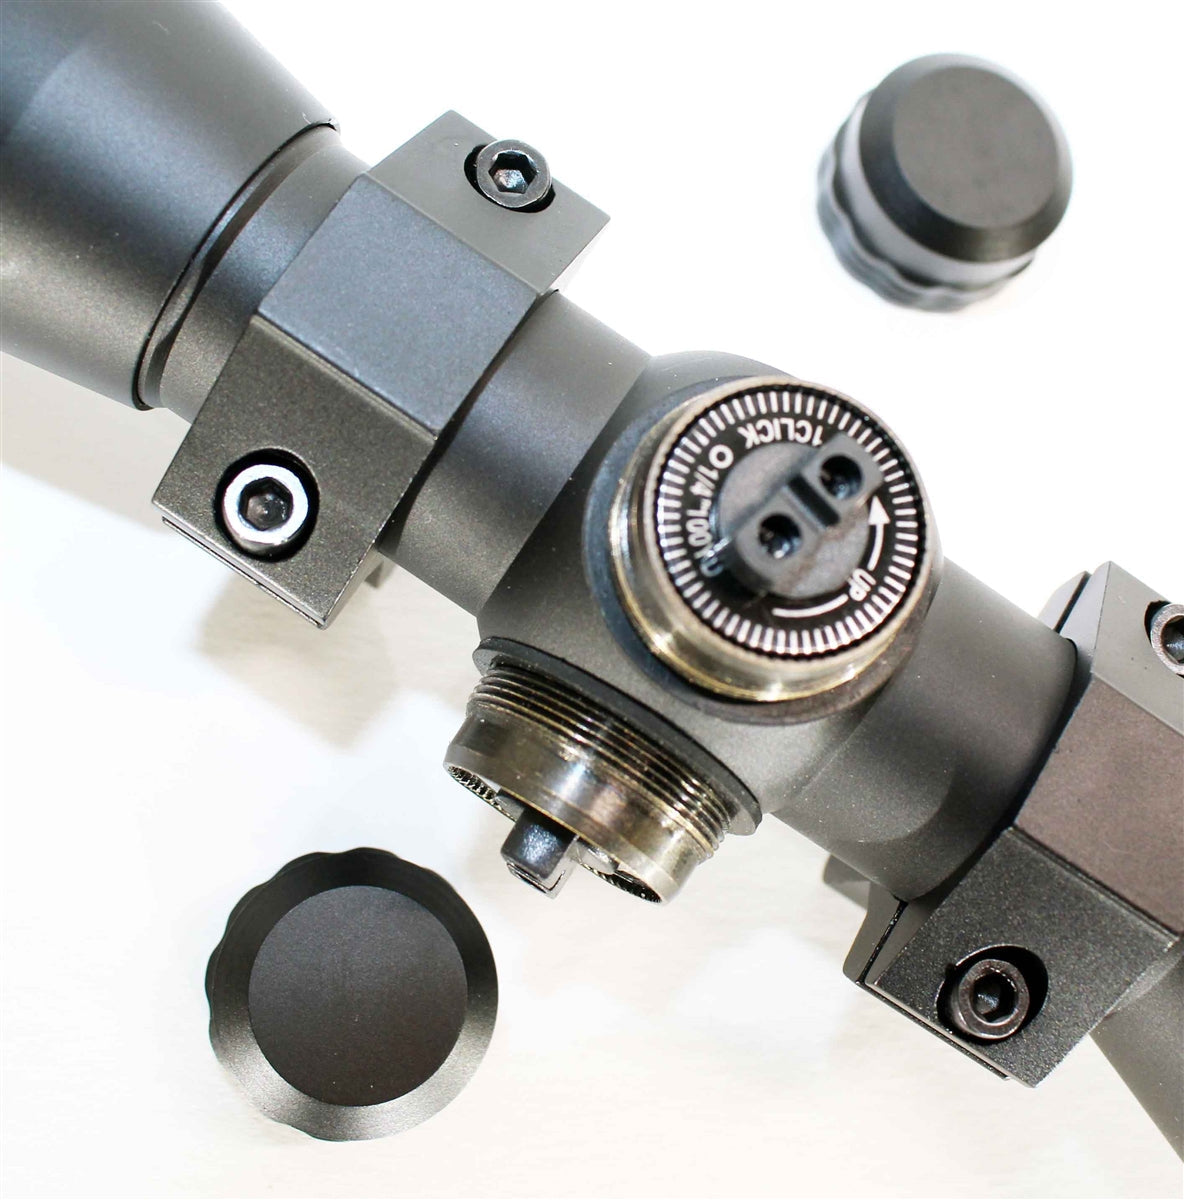 mossberg 590 pump scope sight.